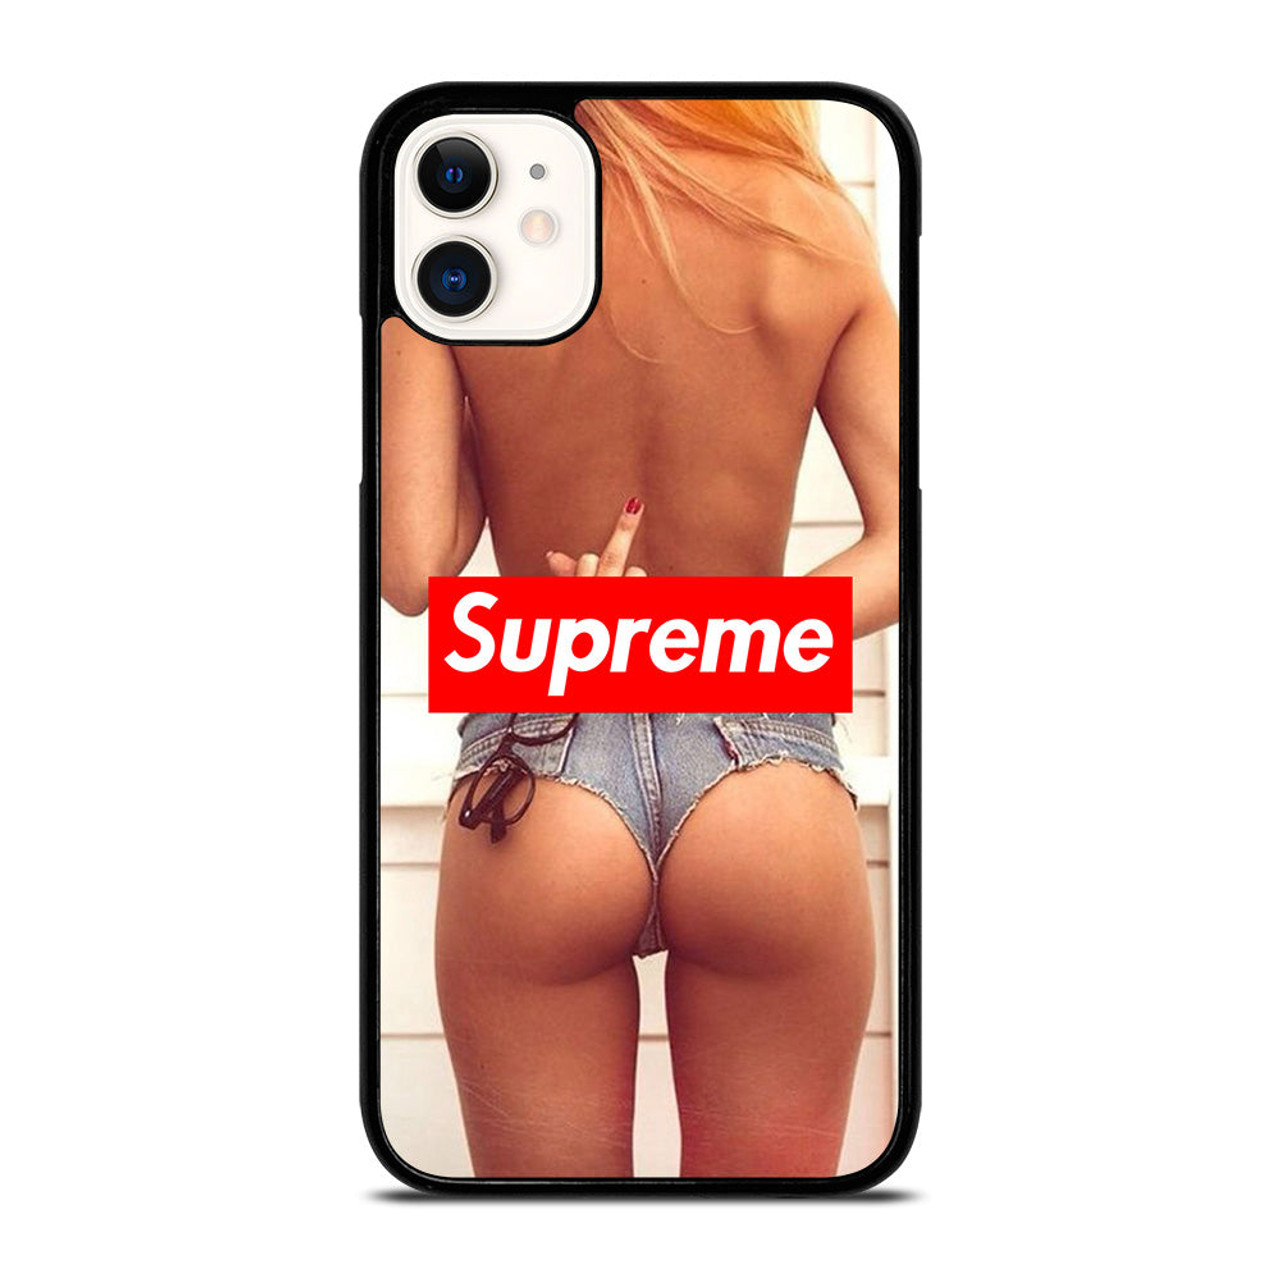 IPhone 6 Plus / 6S Plus Case - Supreme Fit Girl